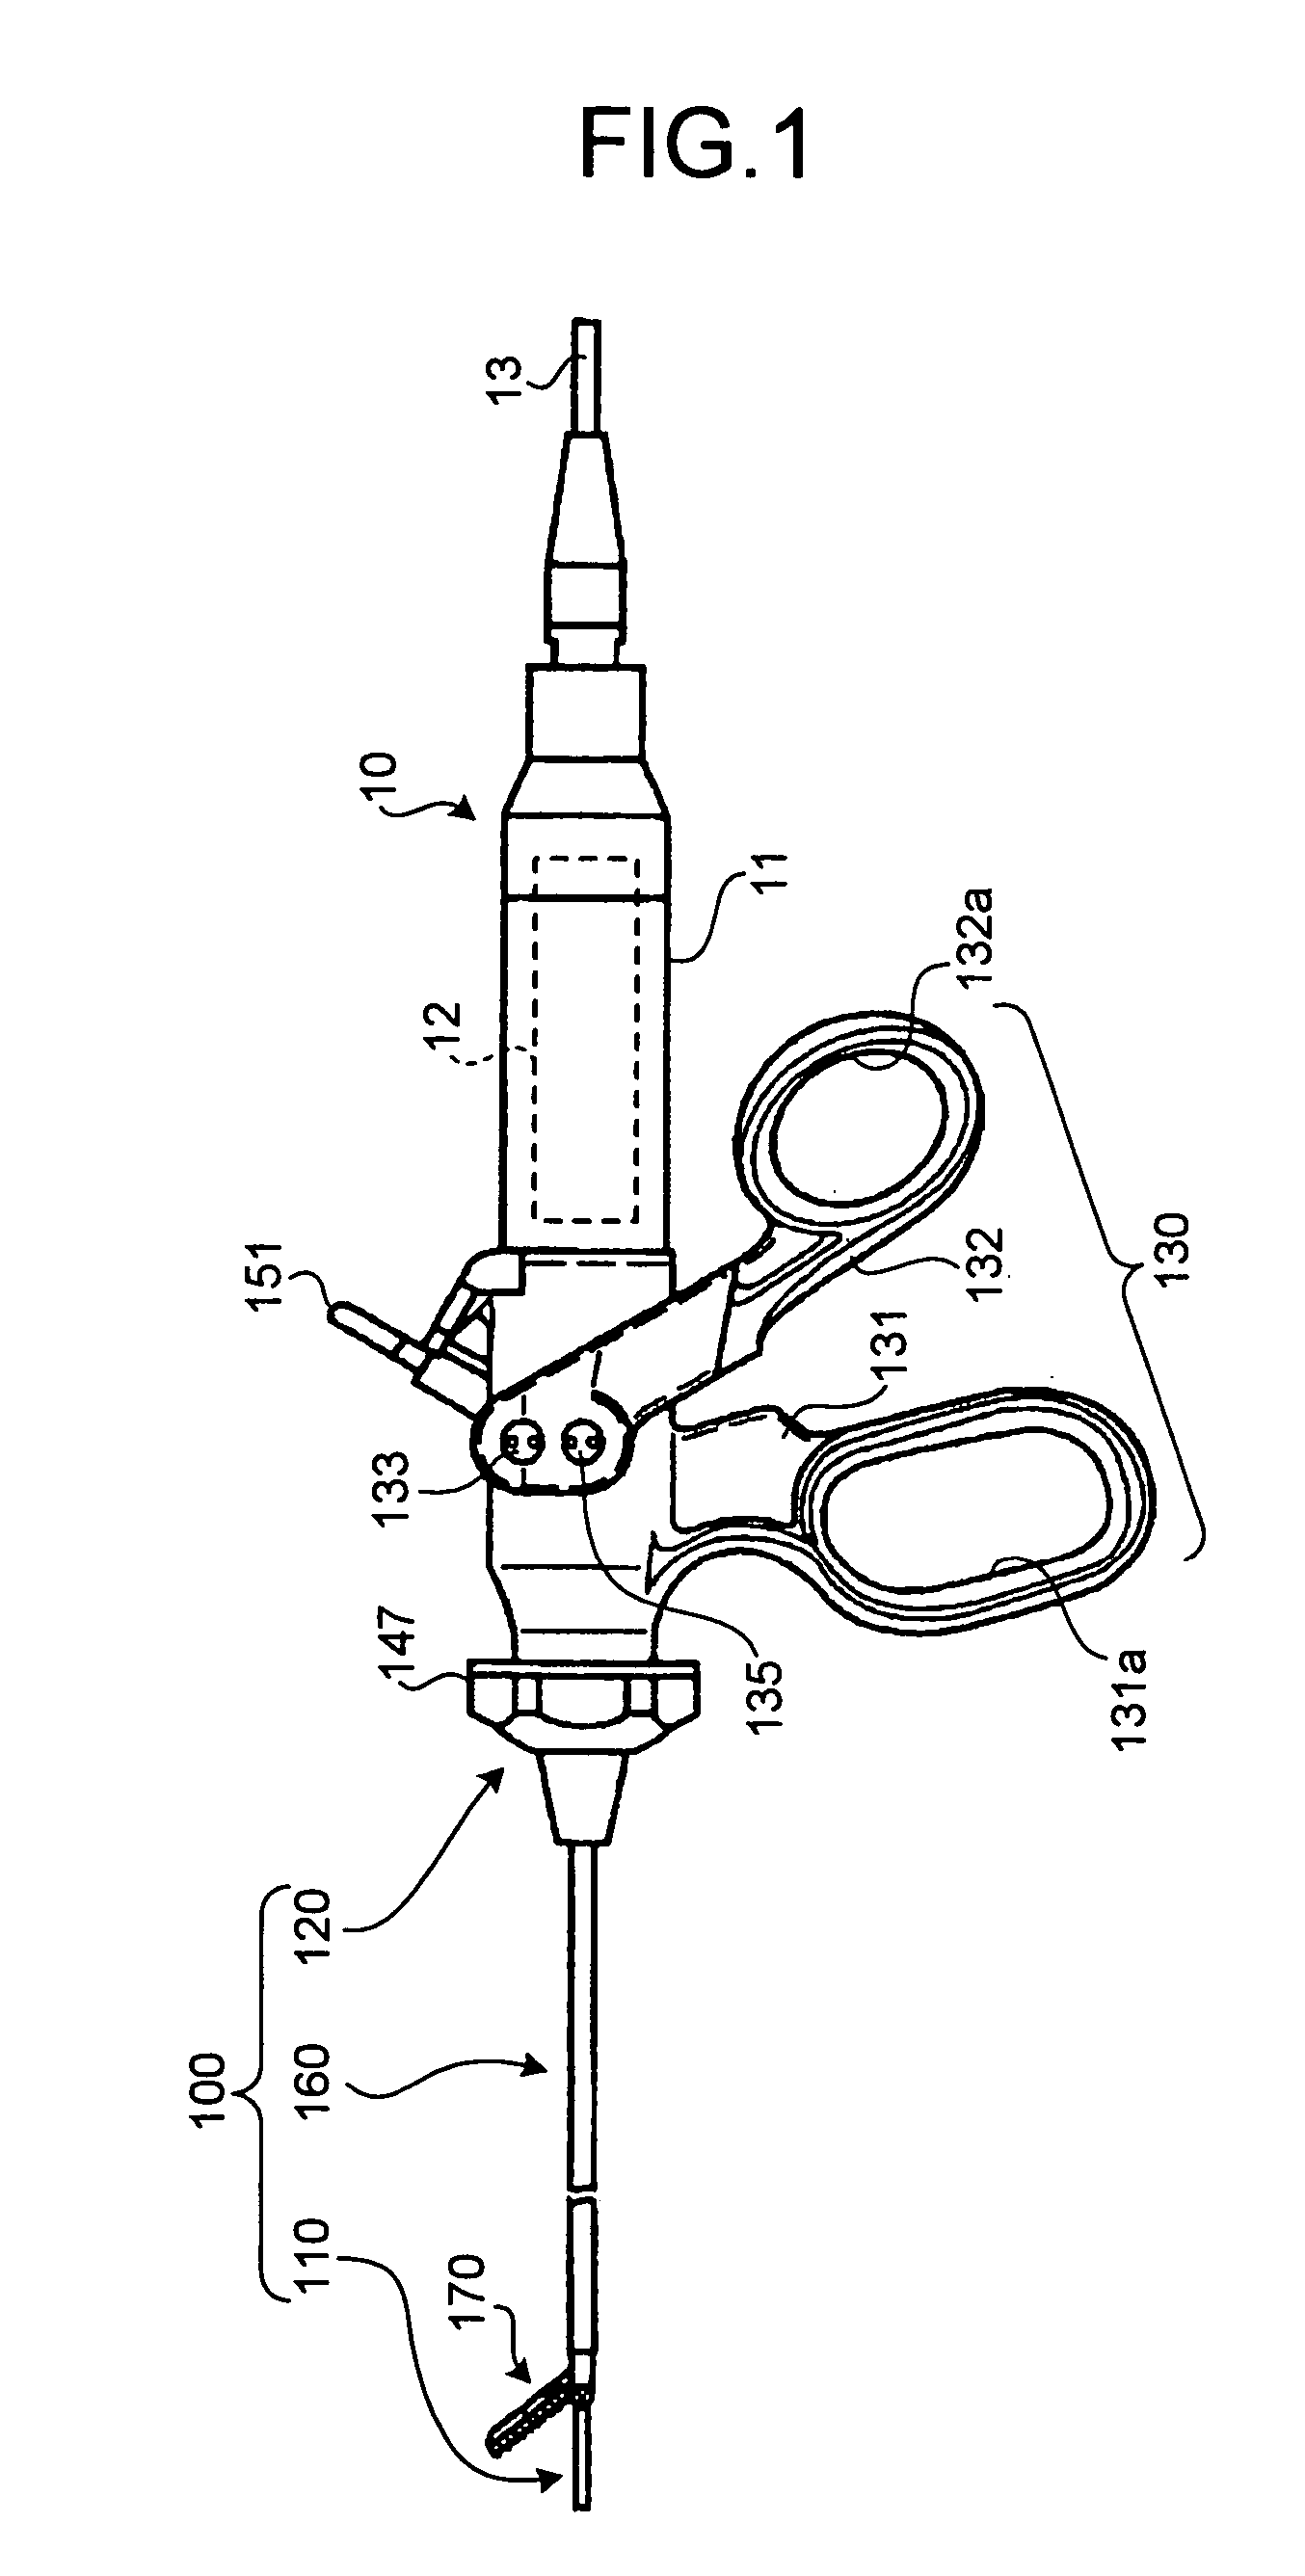 Ultrasonic treatment apparatus